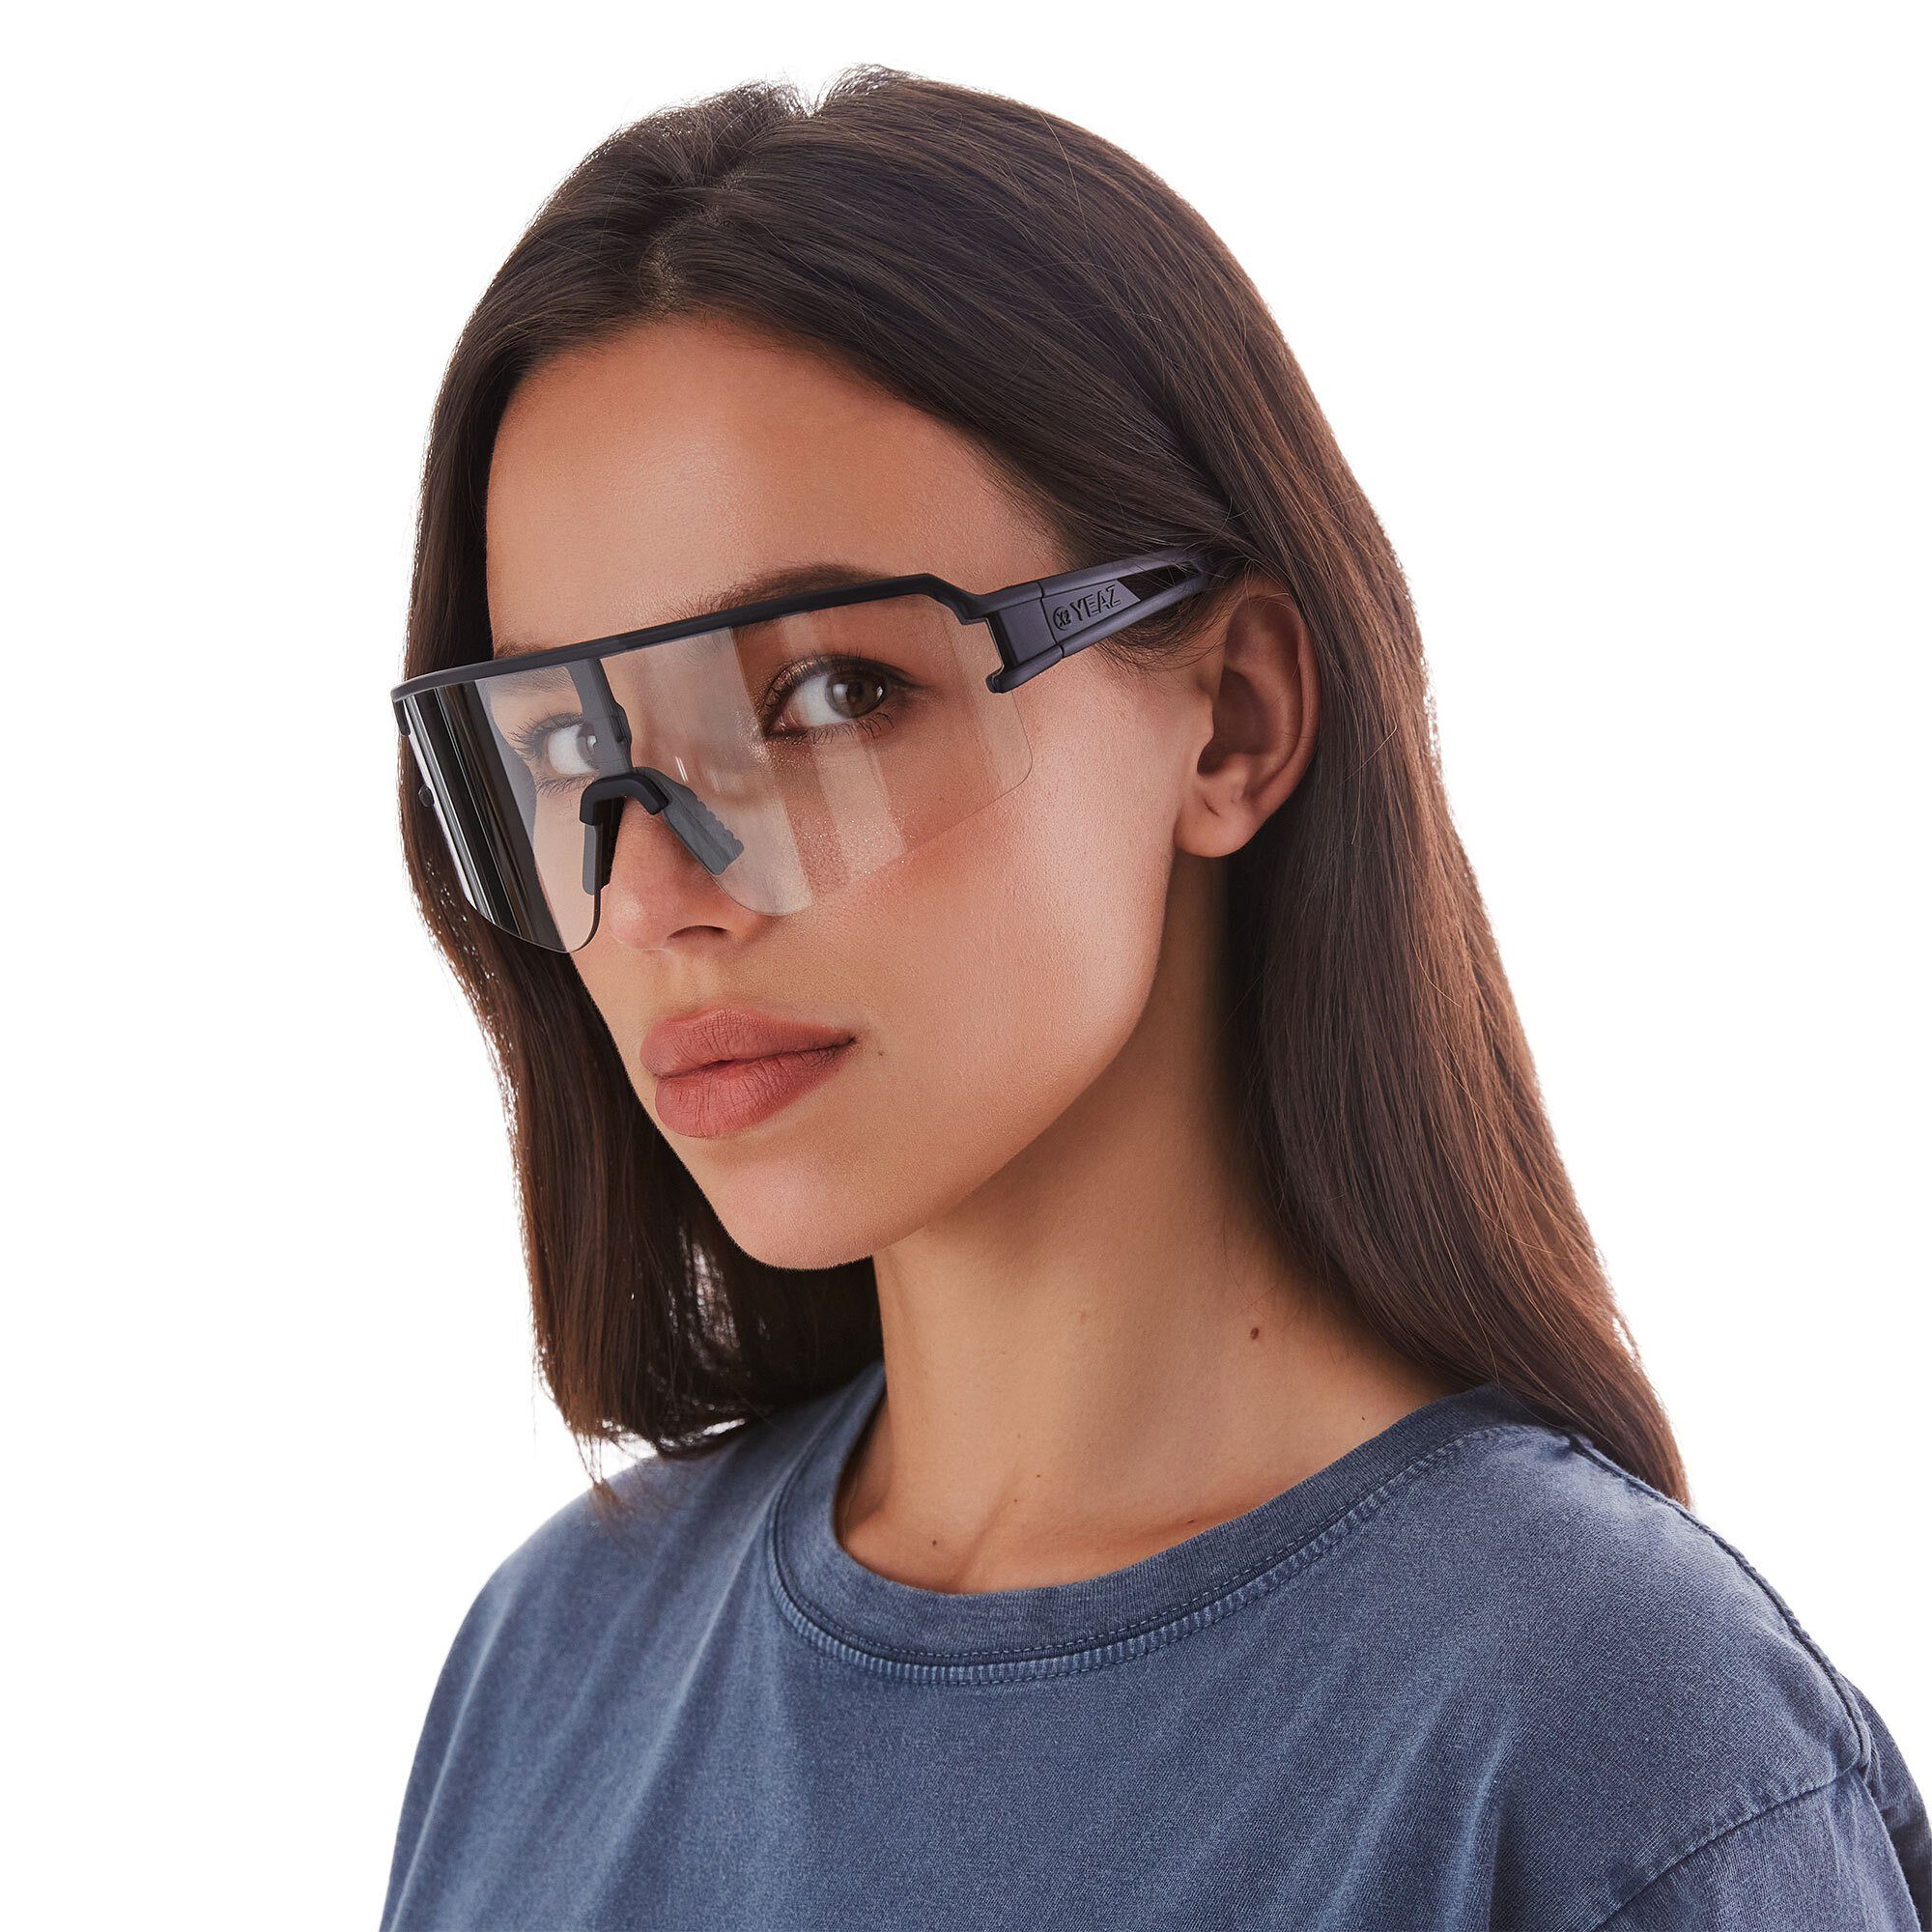 YEAZ Sportbrille SUNSPOT sport-sonnenbrille / Sport-Sonnenbrille weiß/transparent, schwarz transparent